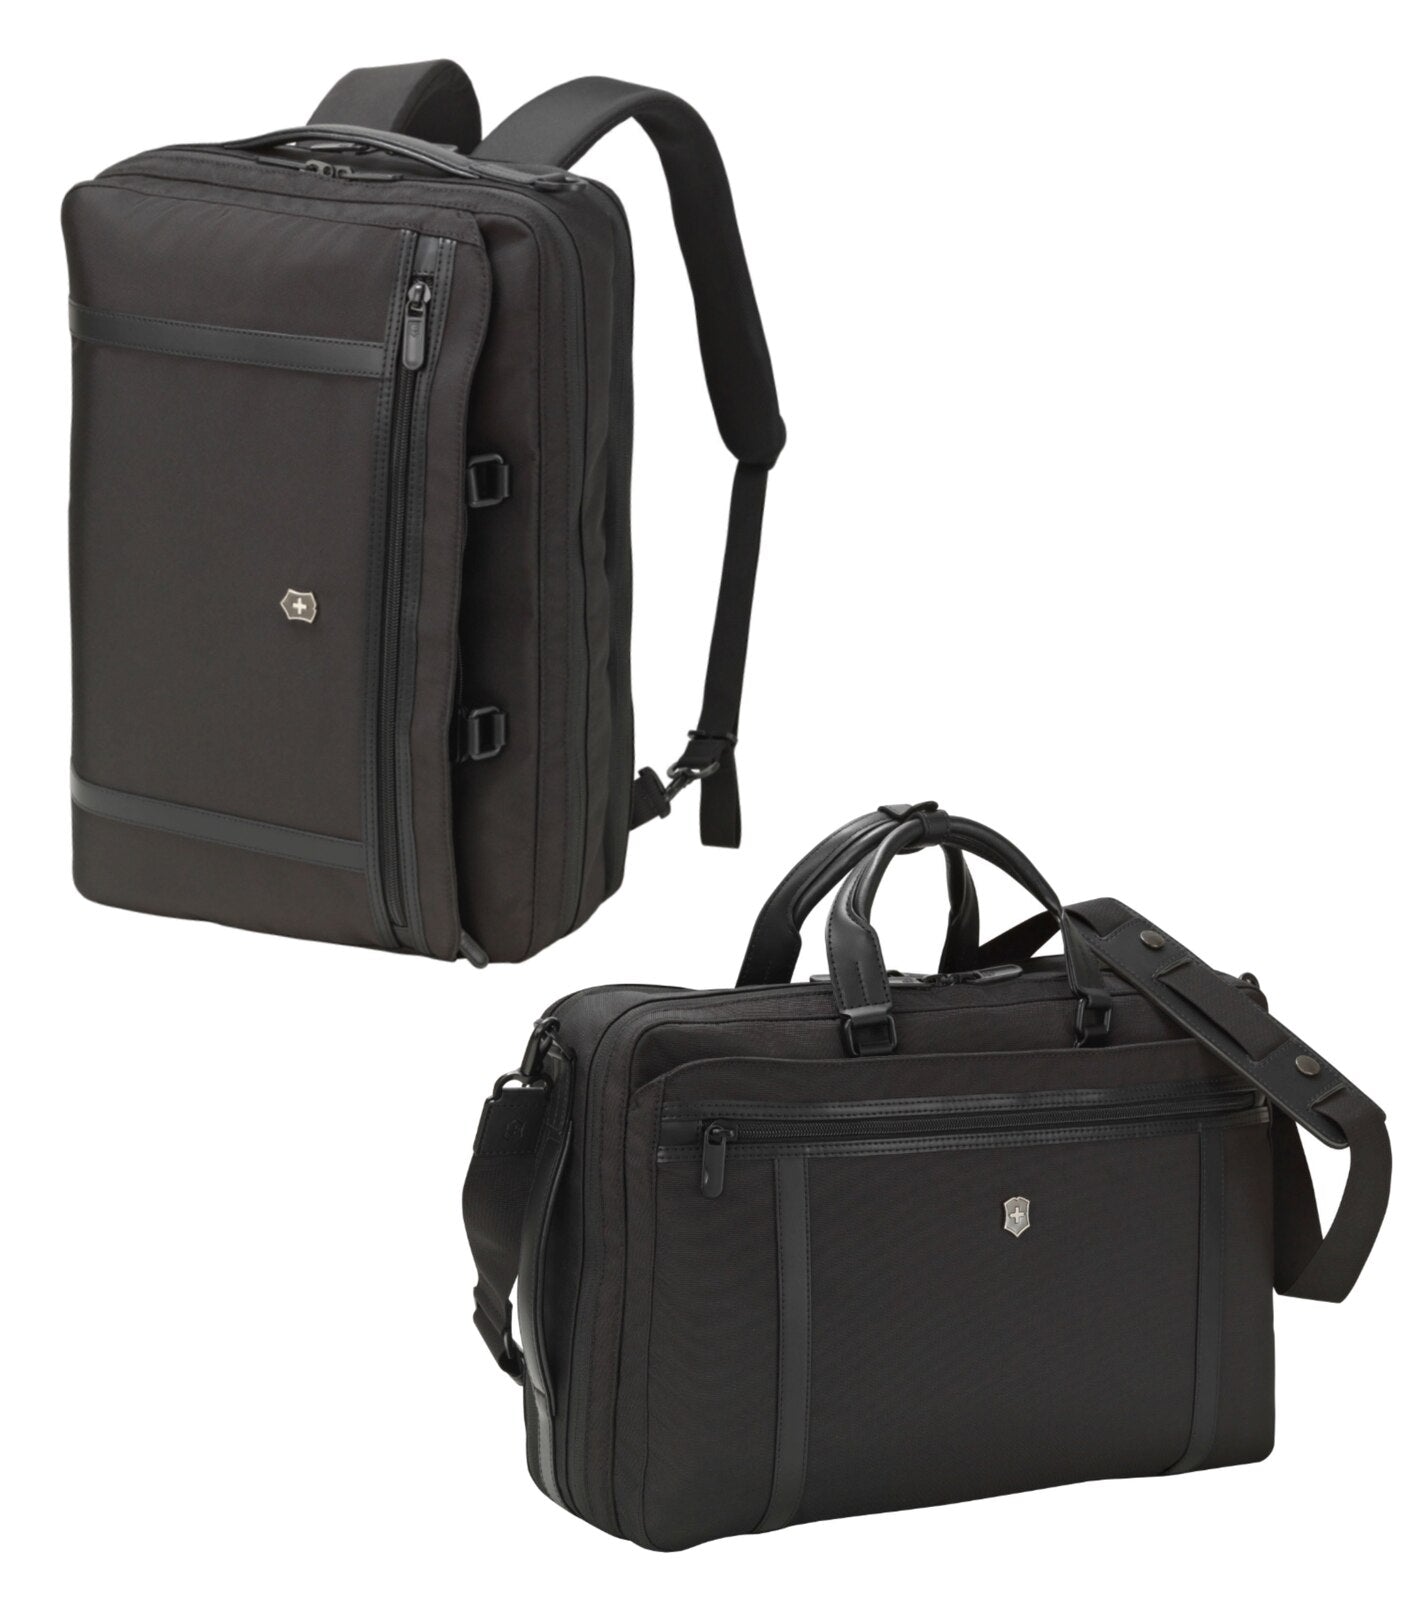 Samsonite Backpack and Samsonite Briefcase